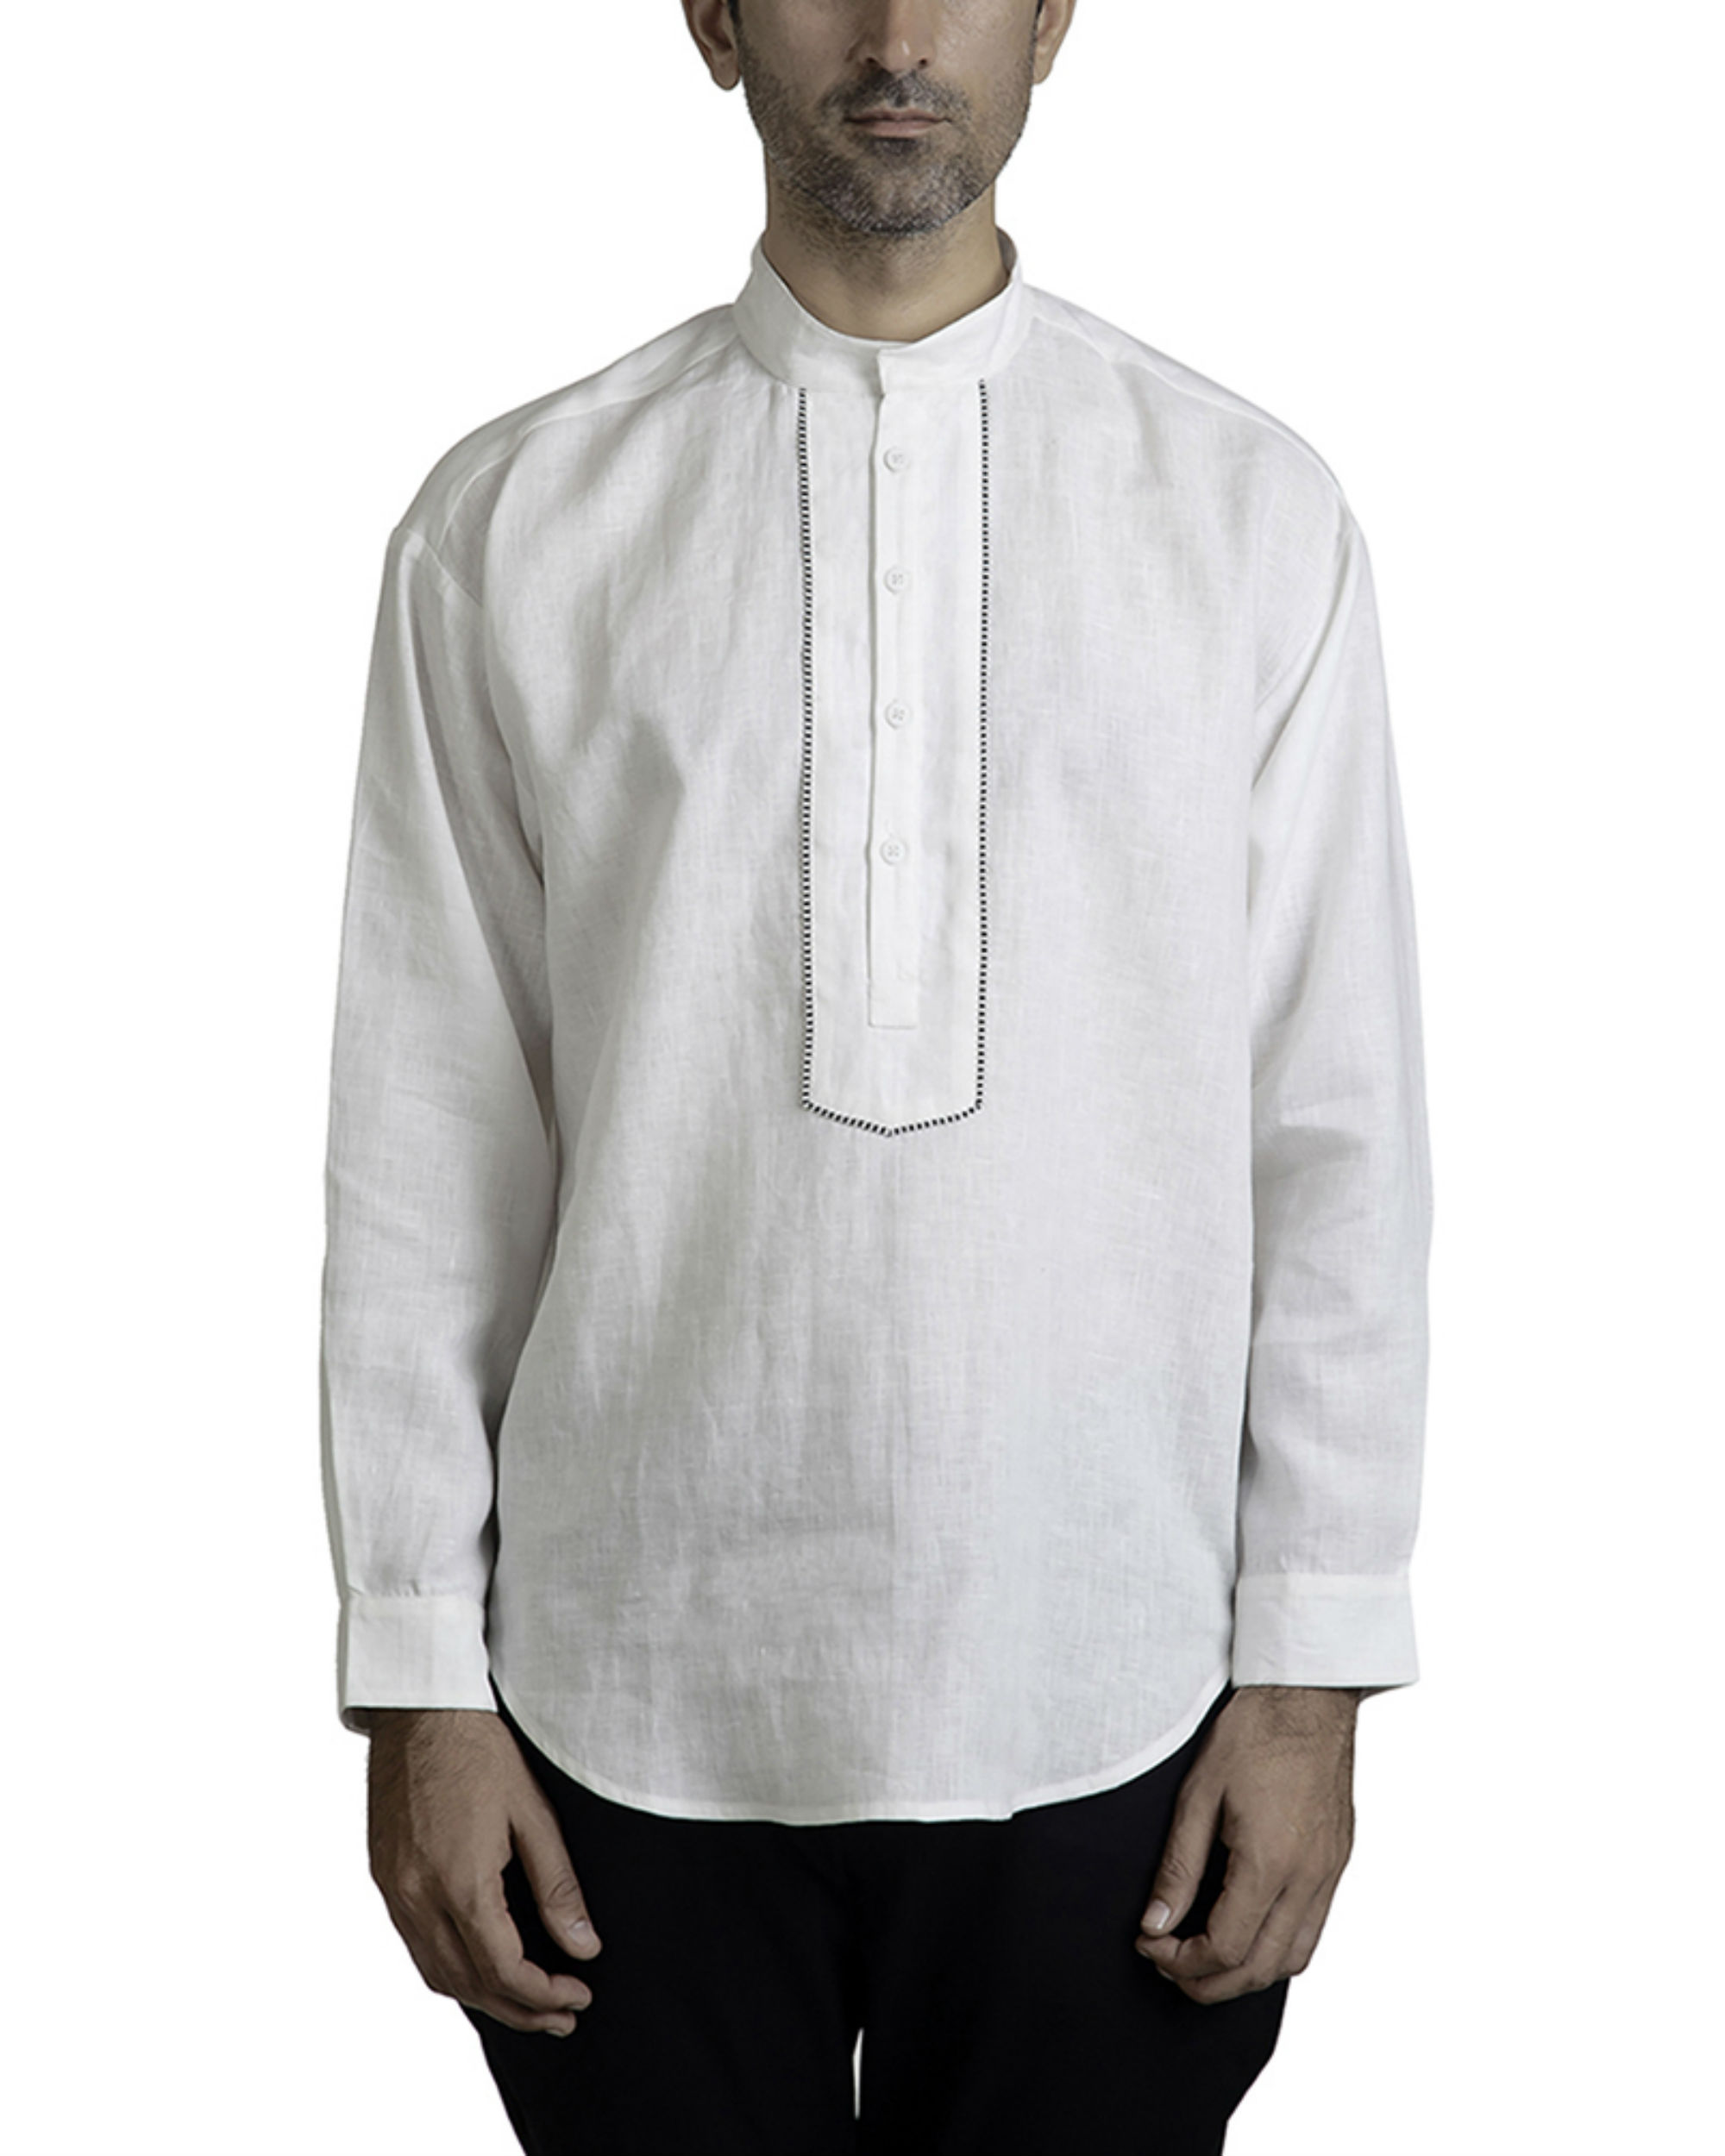 White linen tunic shirt by Dhatu Design Studio | The Secret Label